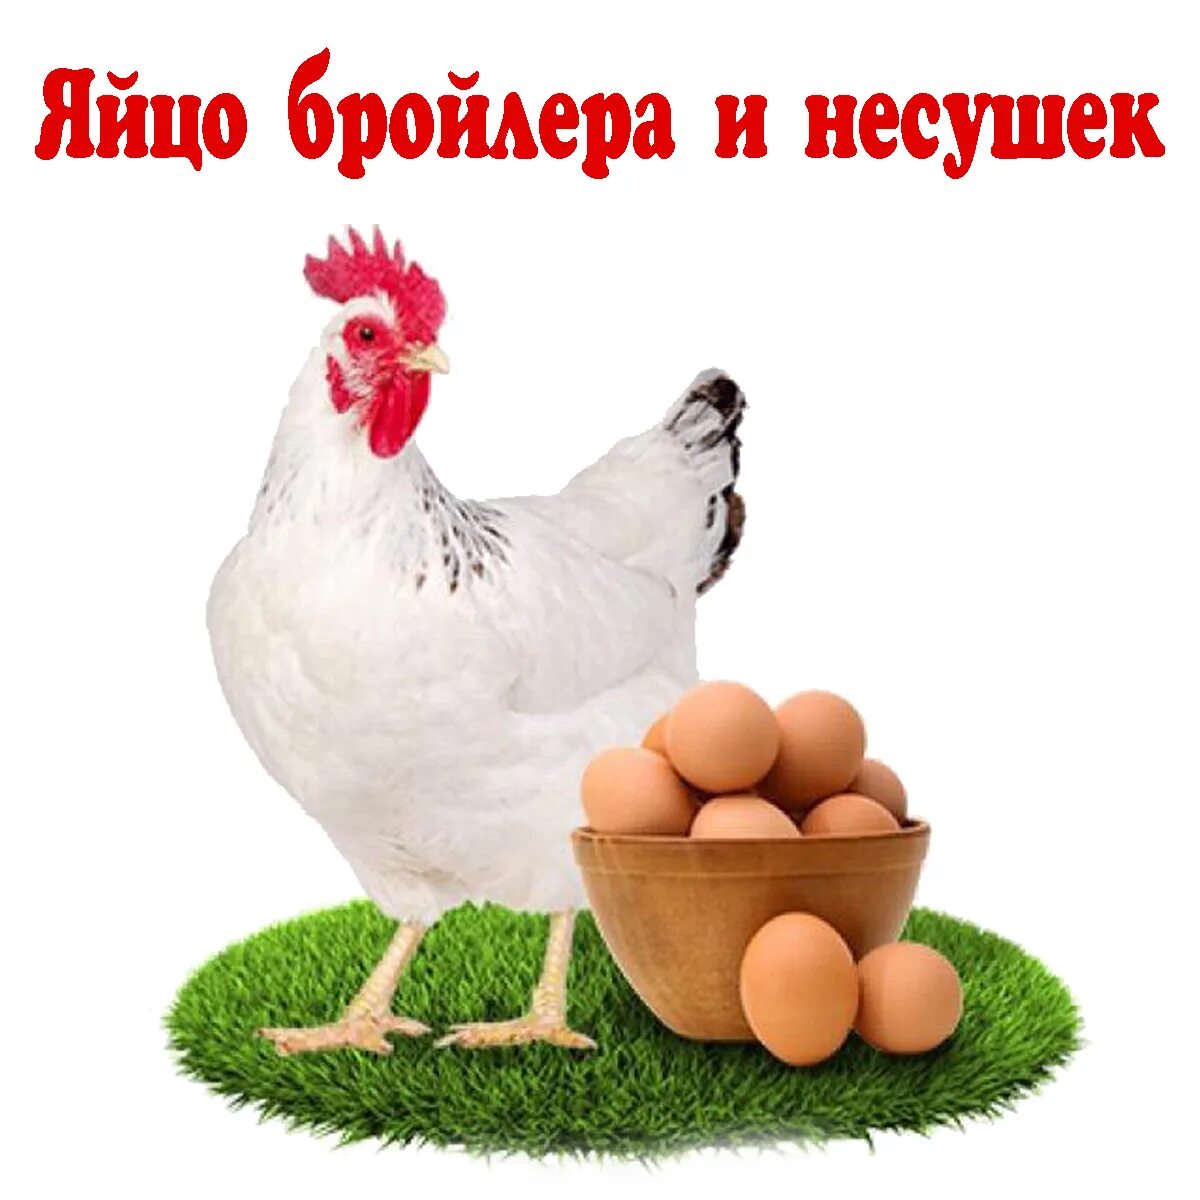 Реклама курочки. Курица с яйцами. Курочка с яичками. Курица на белом фоне. Белая курица.